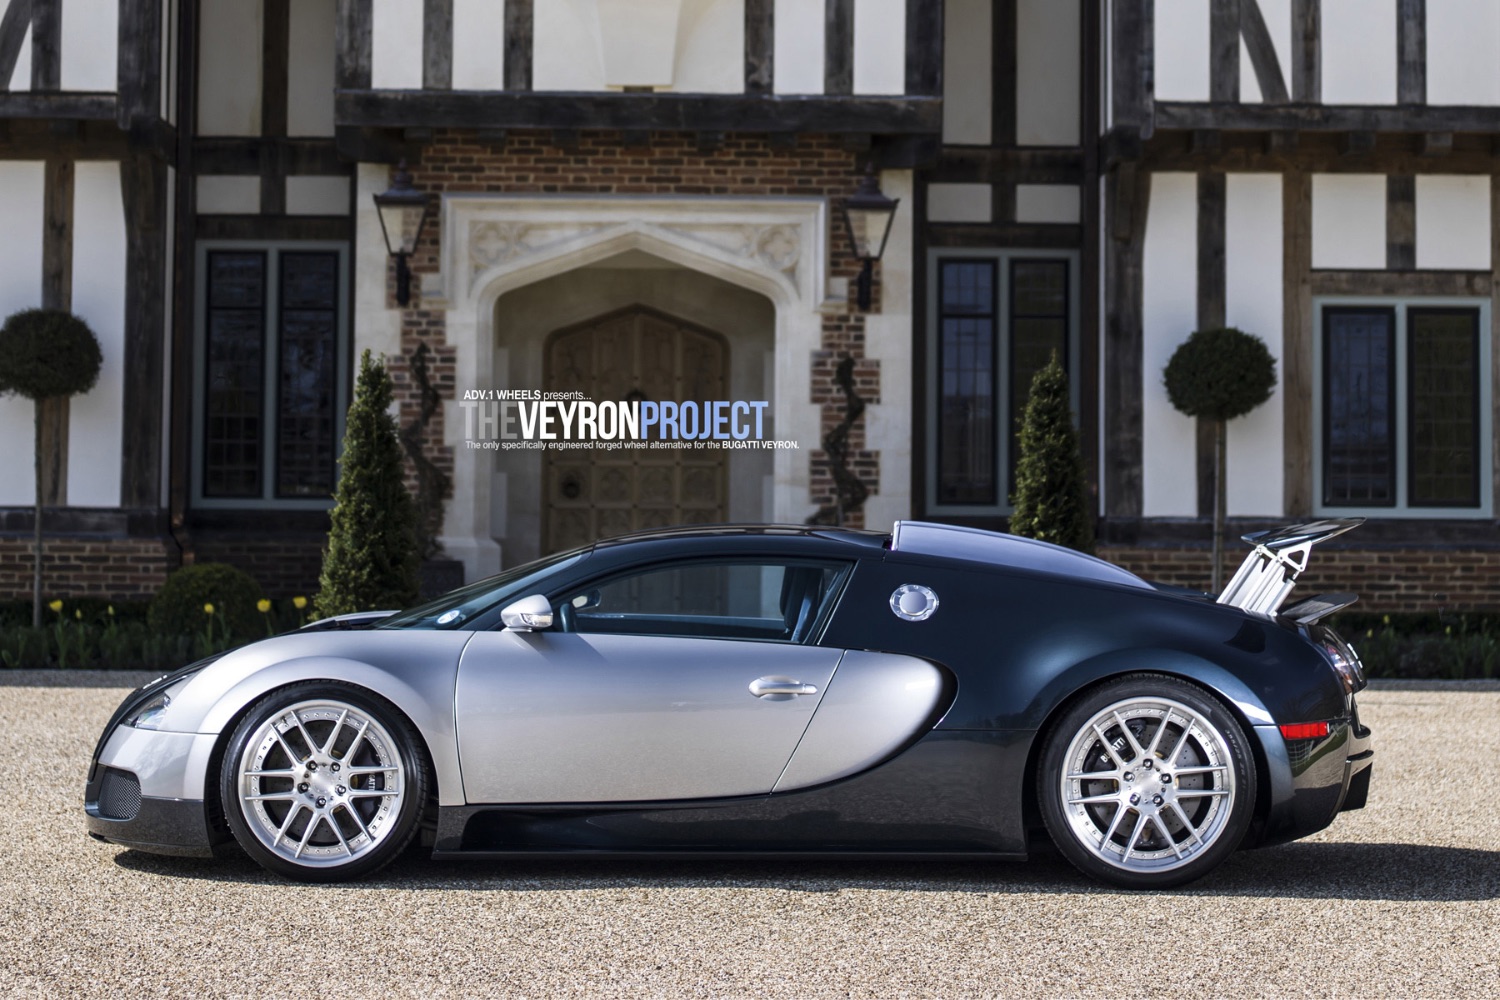 adv1-aftermarket-bugatti-veryon-wheels-rims-horsepower-supercar-luxury-B